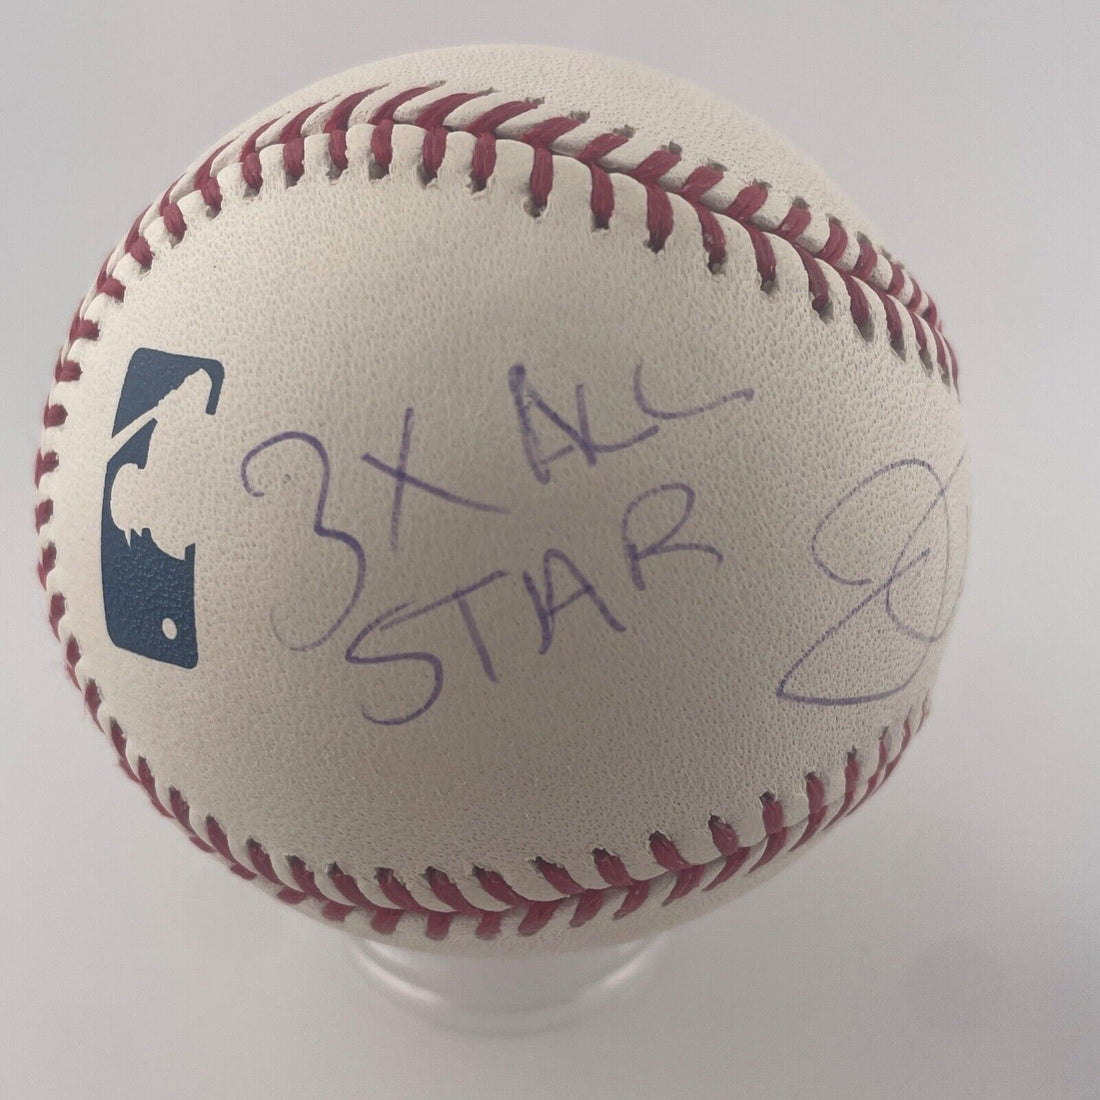 Joe Peptone Signed Inscribed Baseball. 3X All Star. New York Yankees. JSA